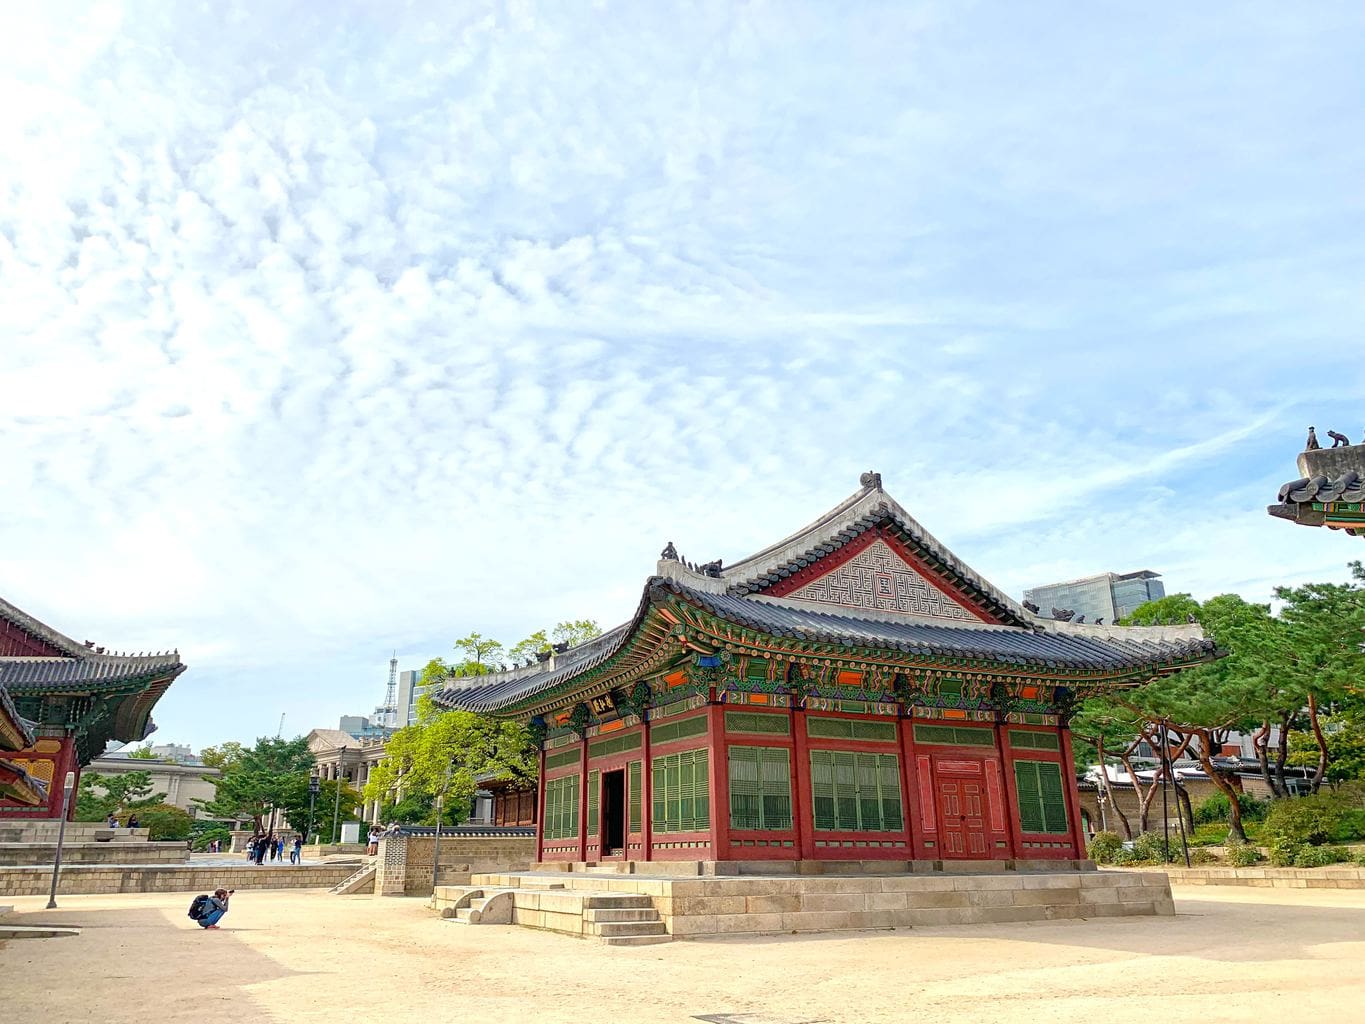 Deokhongjeon Hall